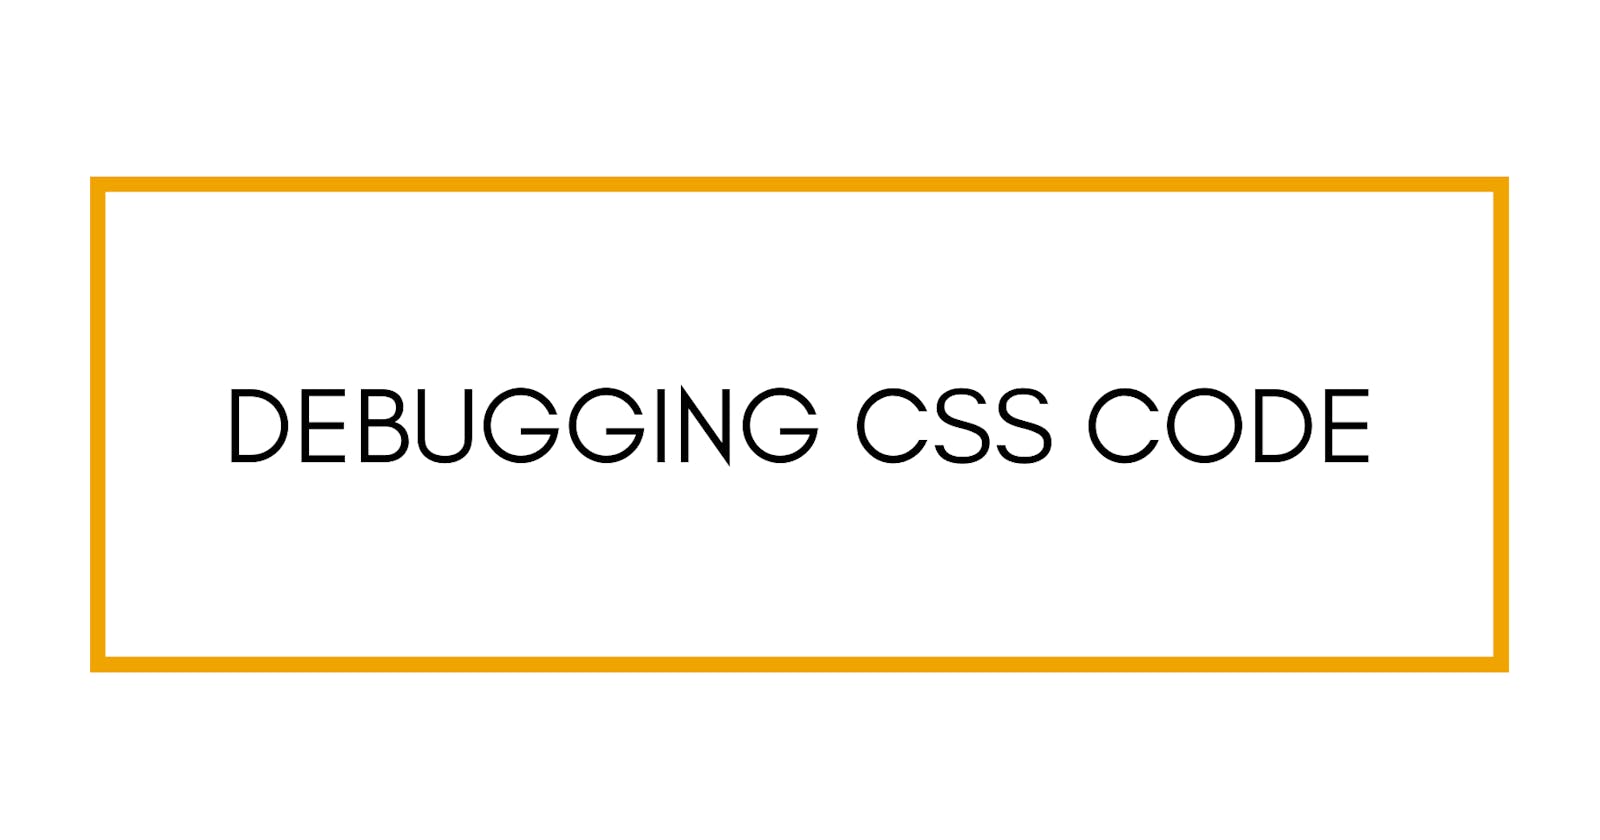 The Best Way To Debug CSS Code